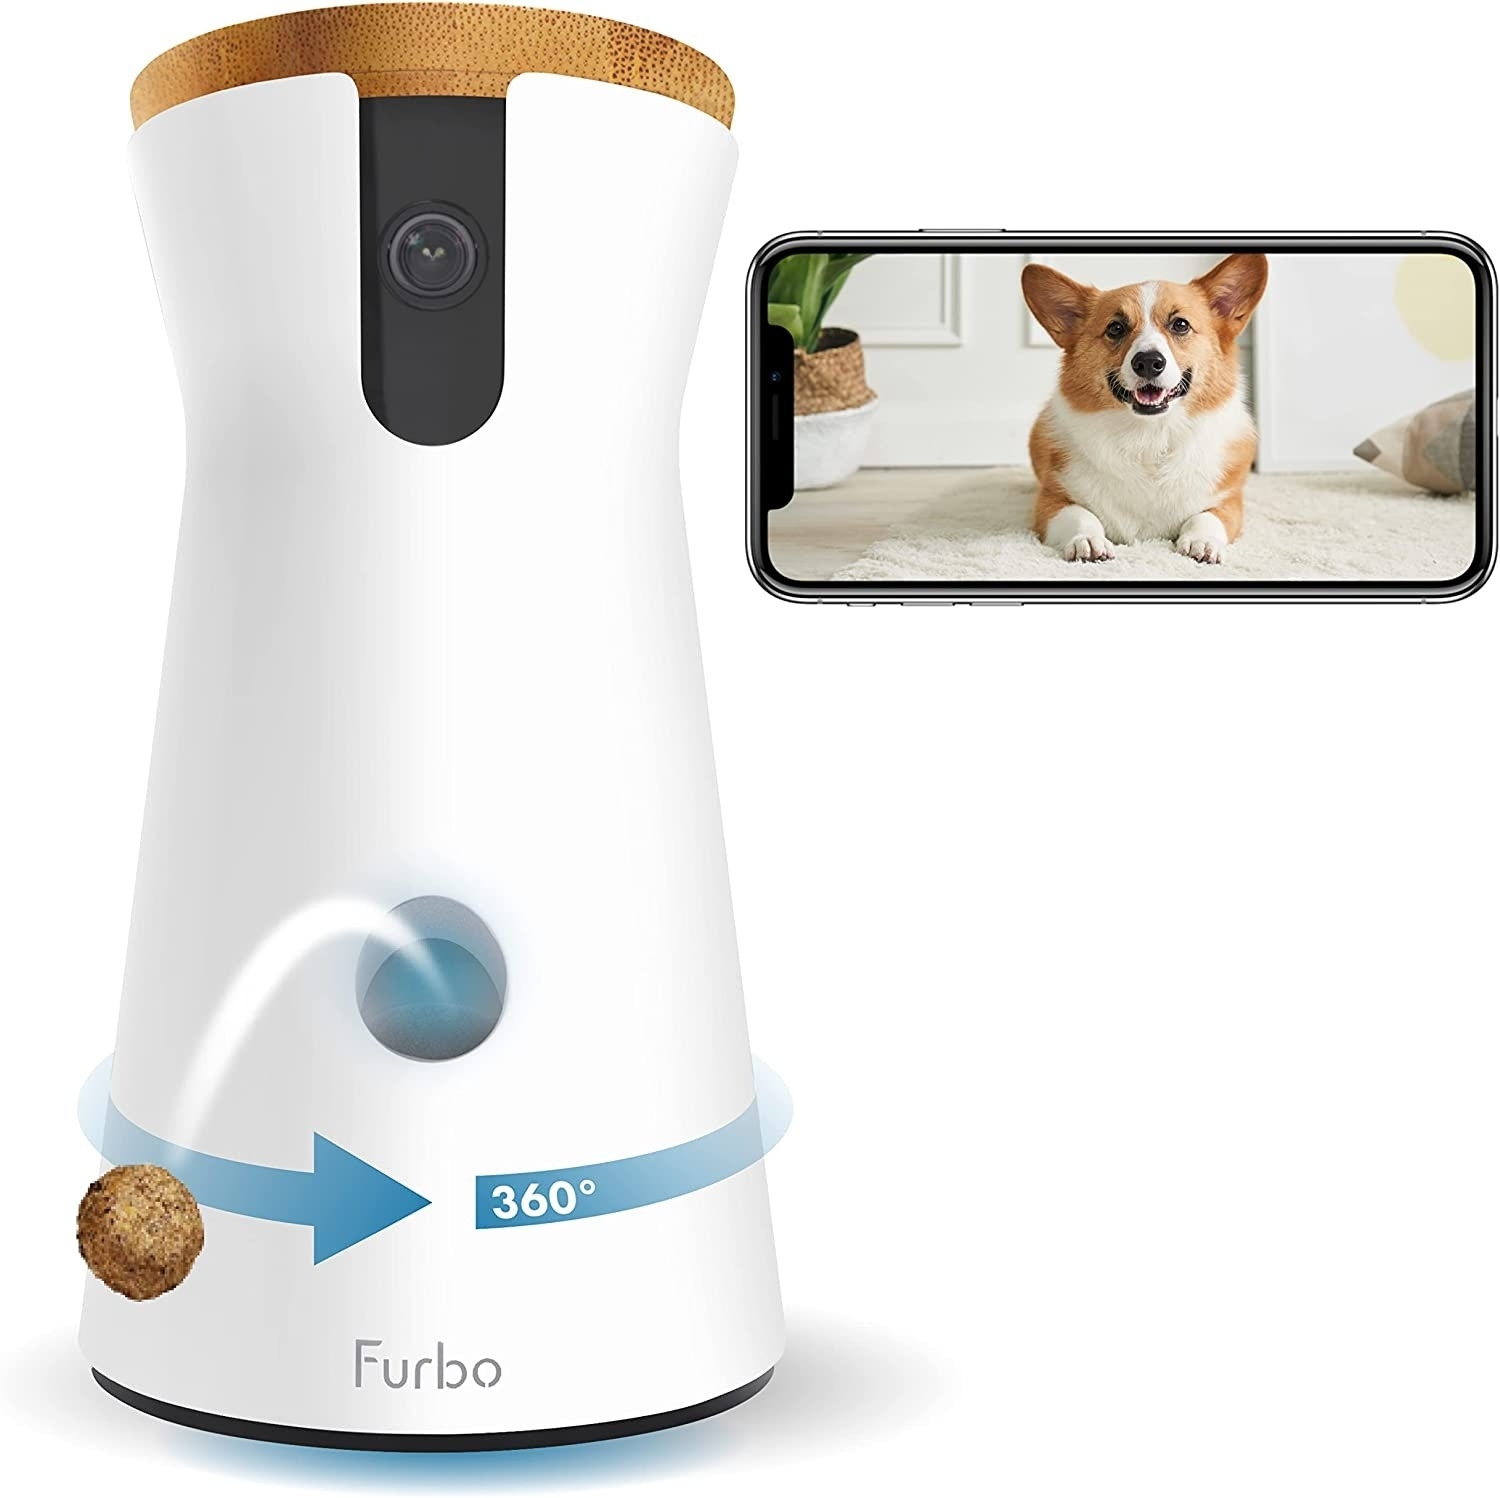 The Furbo dog camera